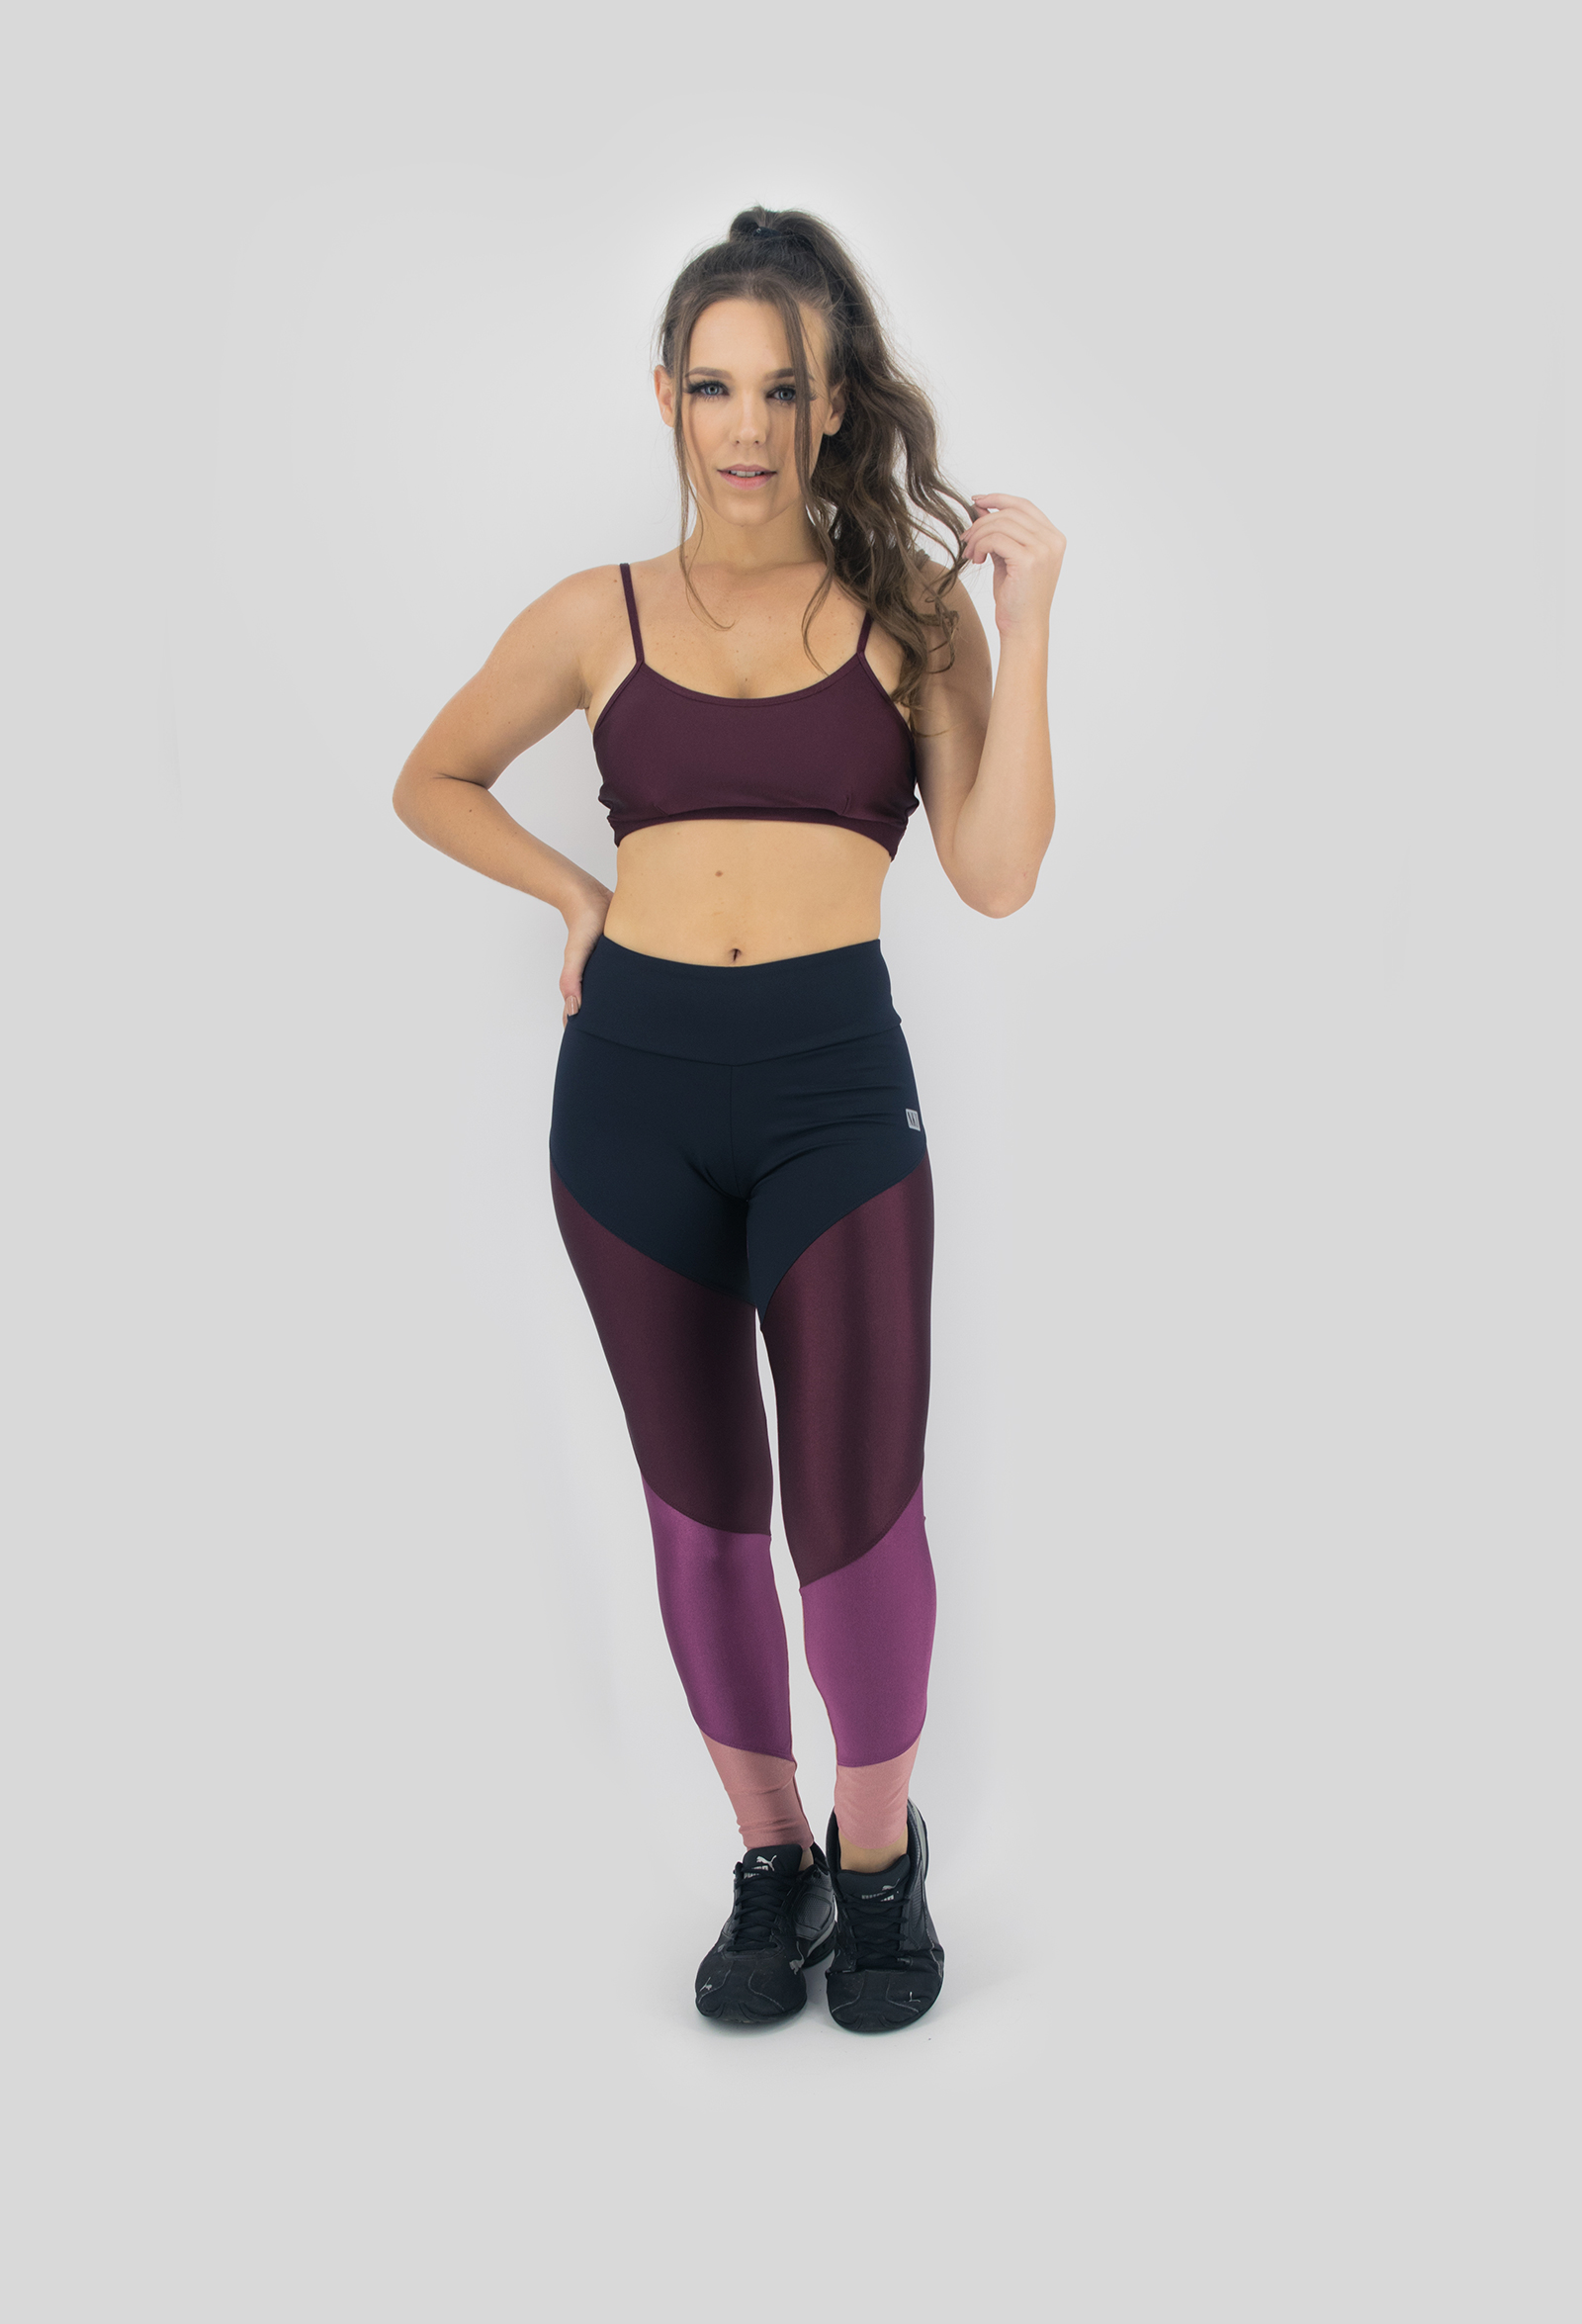 Legging Profusion Bordo, Coleção Move Your Body - NKT Fitwear Moda Fitness